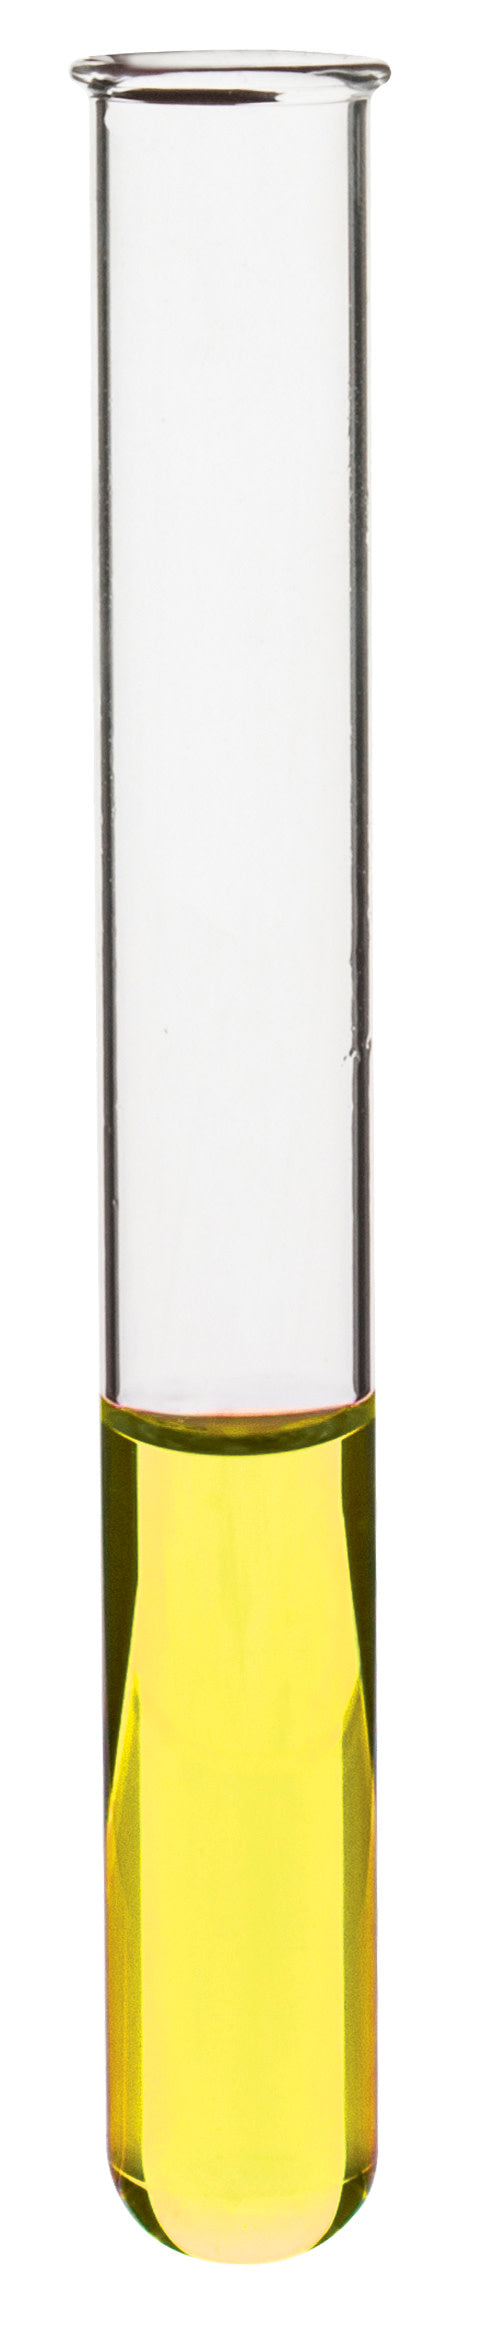 Borosilicate Glass Test Tubes, 3 ml, Light Wall With Beaded Rim